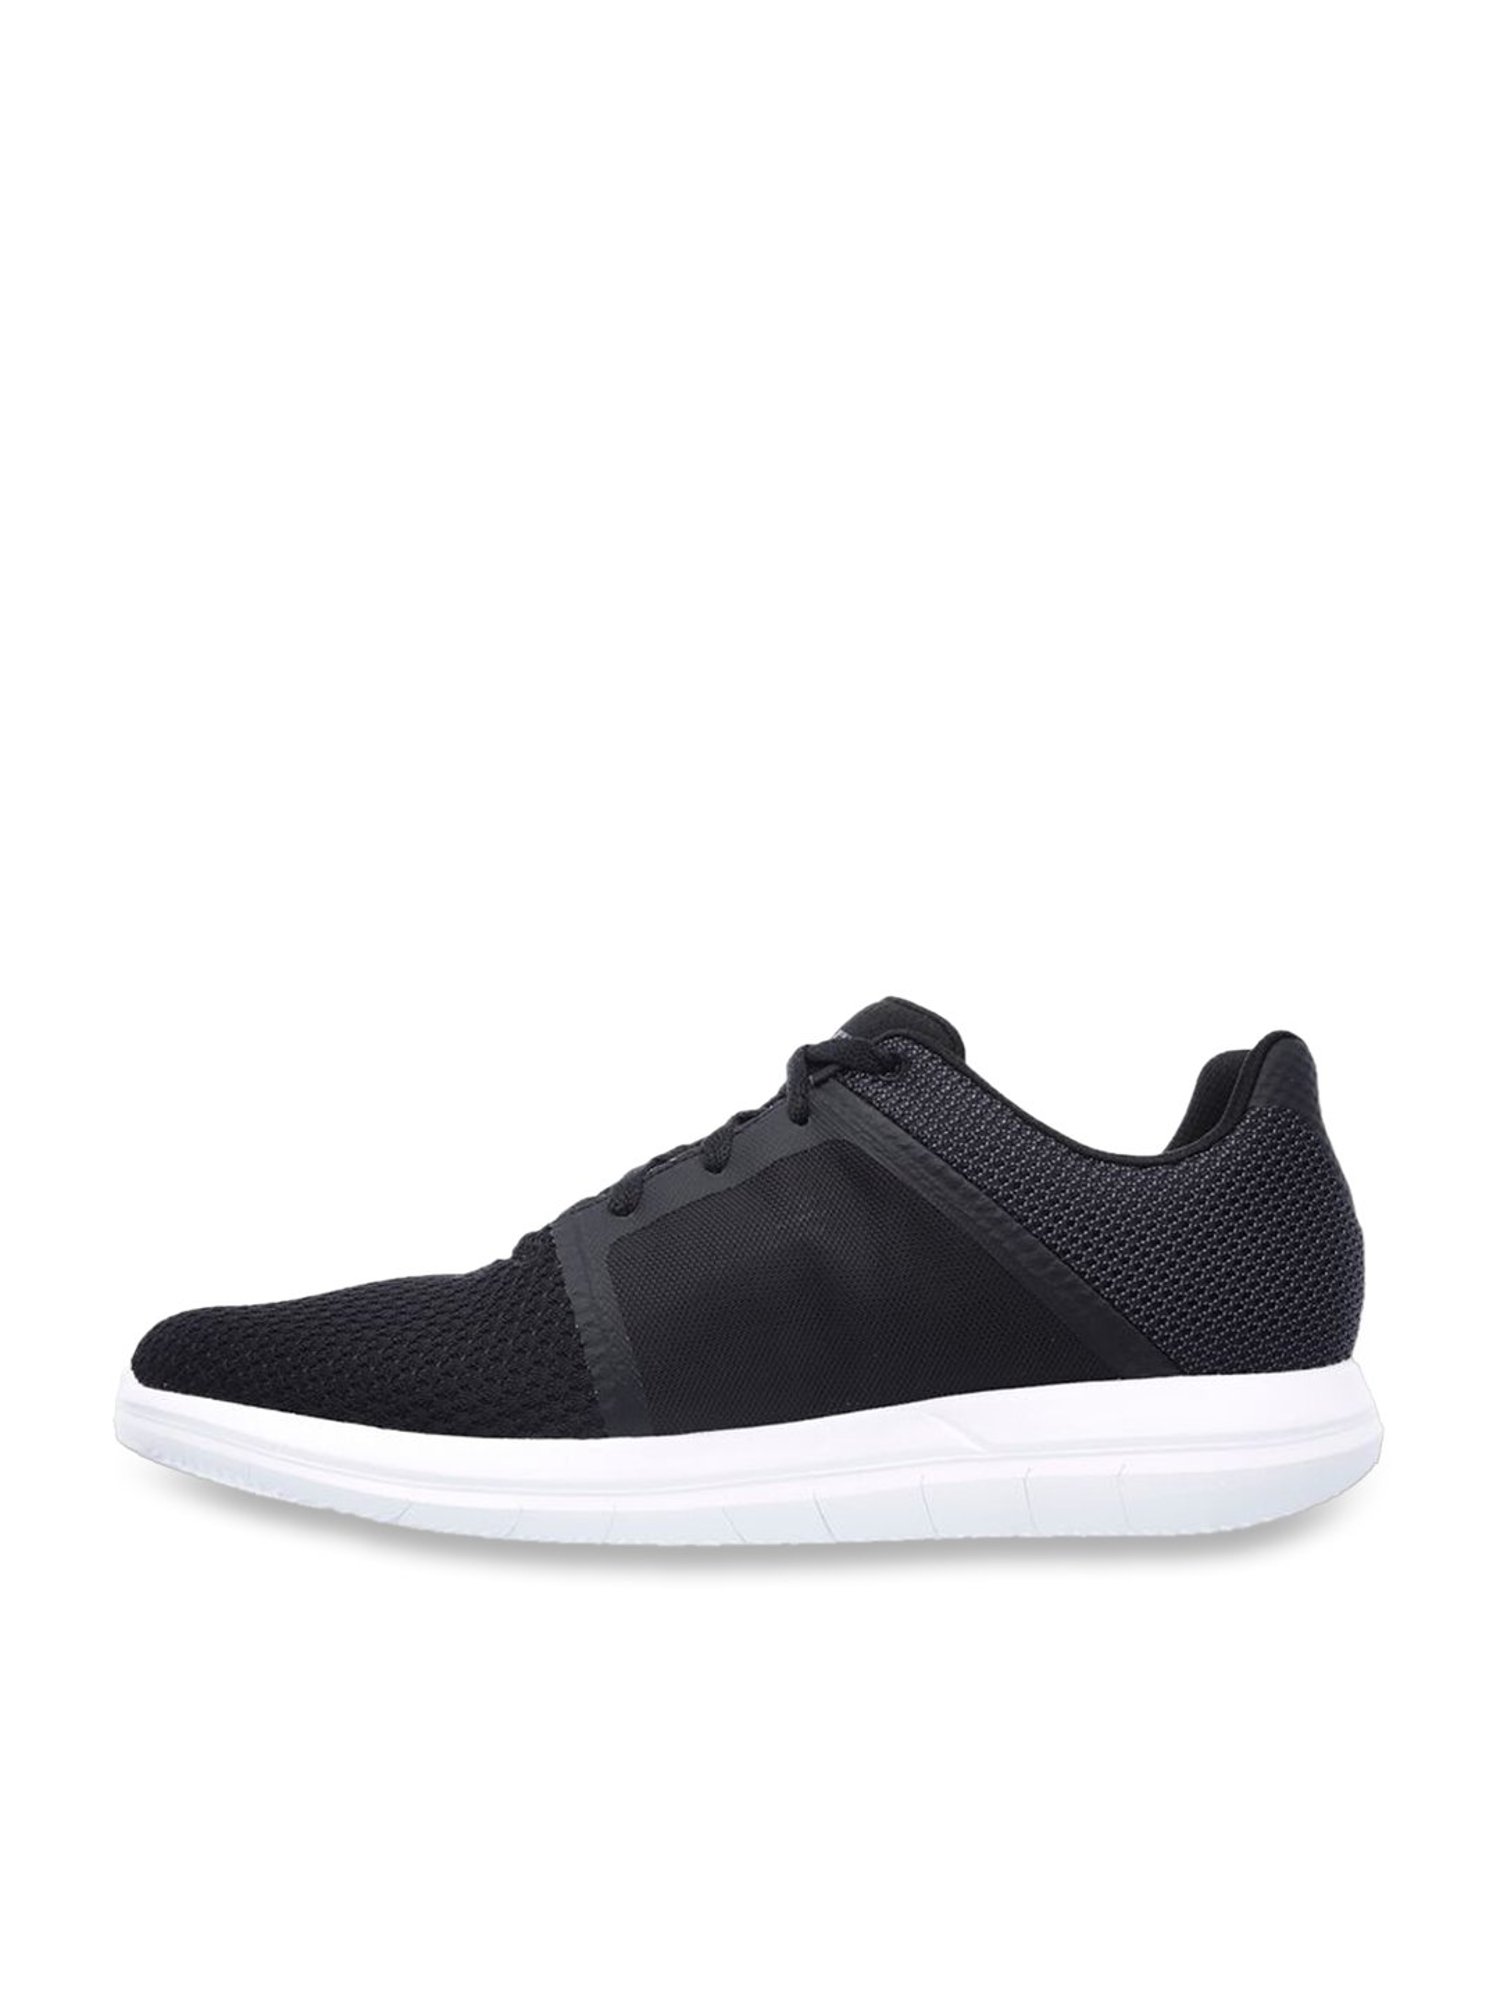 Buy Skechers Men's GO FLEX 2 Carbon Black Walking Shoes for Men at